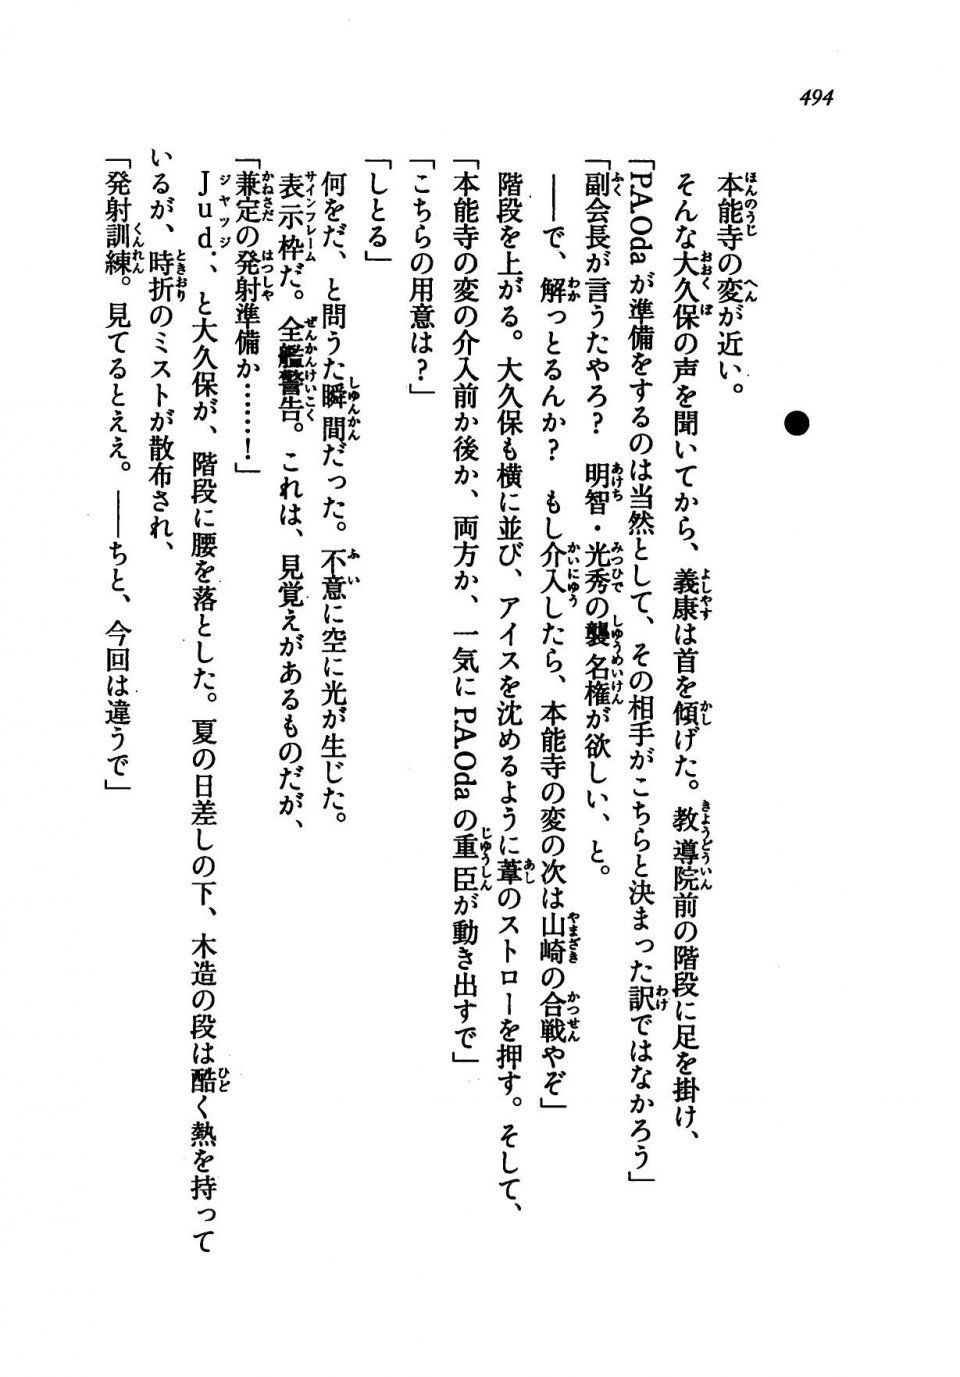 Kyoukai Senjou no Horizon LN Vol 21(8C) Part 1 - Photo #493